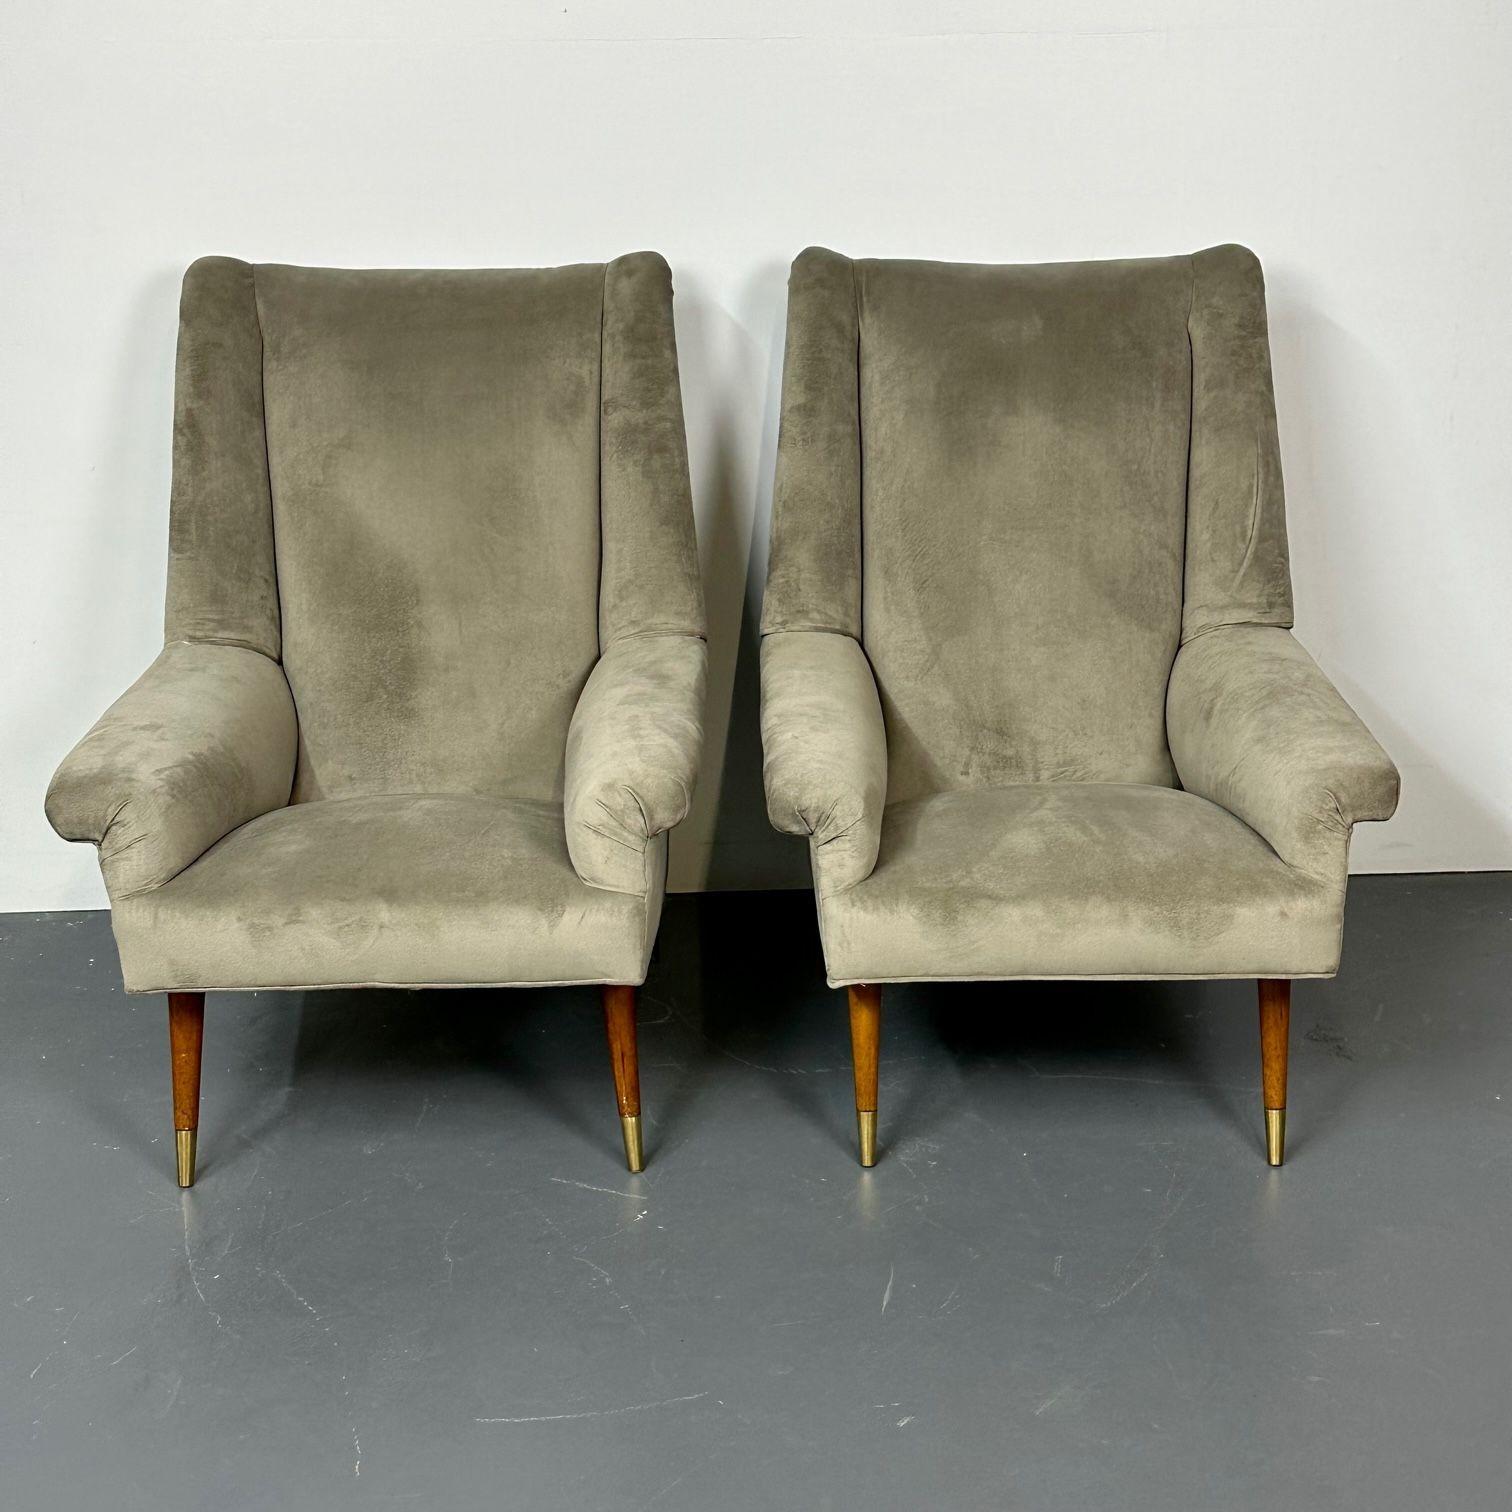 Italian Gio Ponti Style, Mid-Century Modern, Wingback Chairs, Grey Velvet, Wood, 1950s For Sale